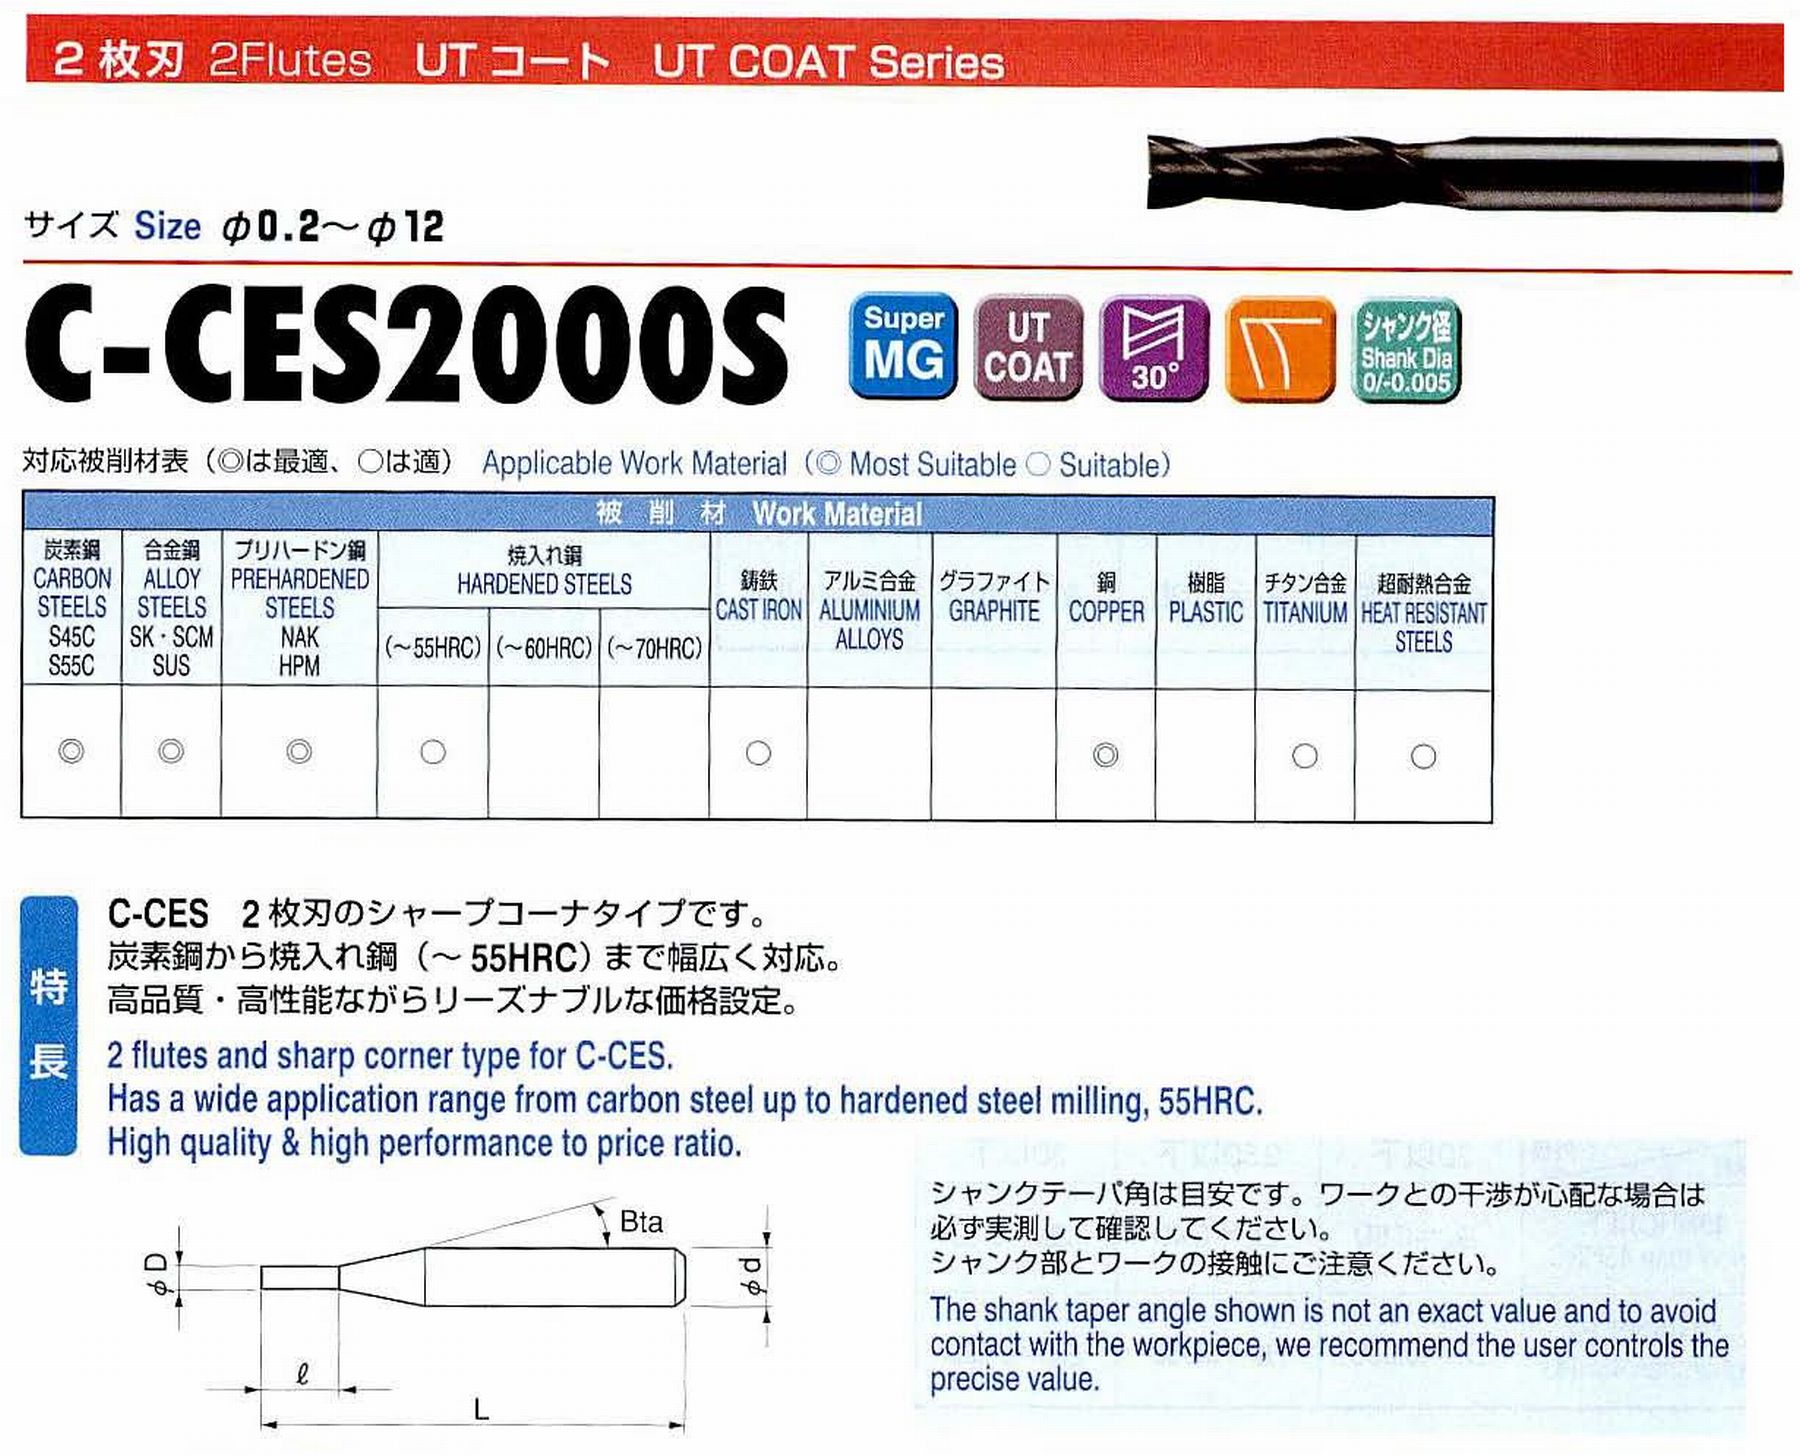 UNION 2枚刃 C-CES2005-0075S 外径0.5 刃長0.75 シャンクテーバ角16度 全長45 シャンク径4